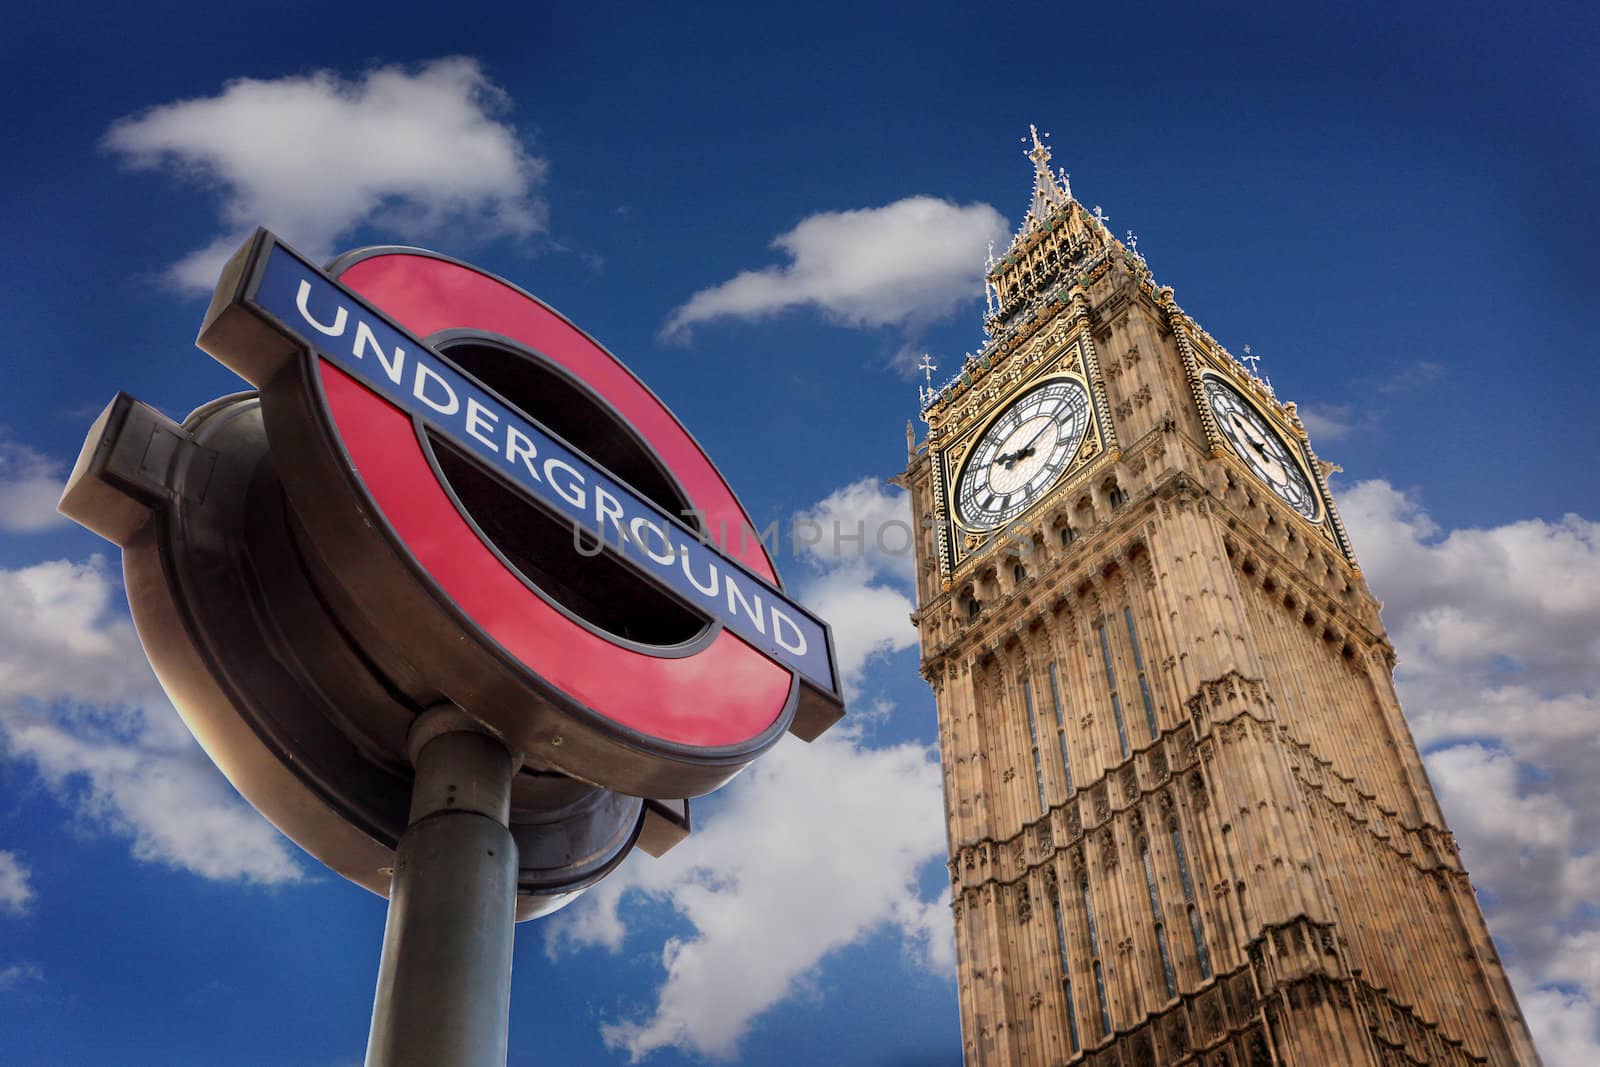 The Underground And Big Ben, London by HD_premium_shots